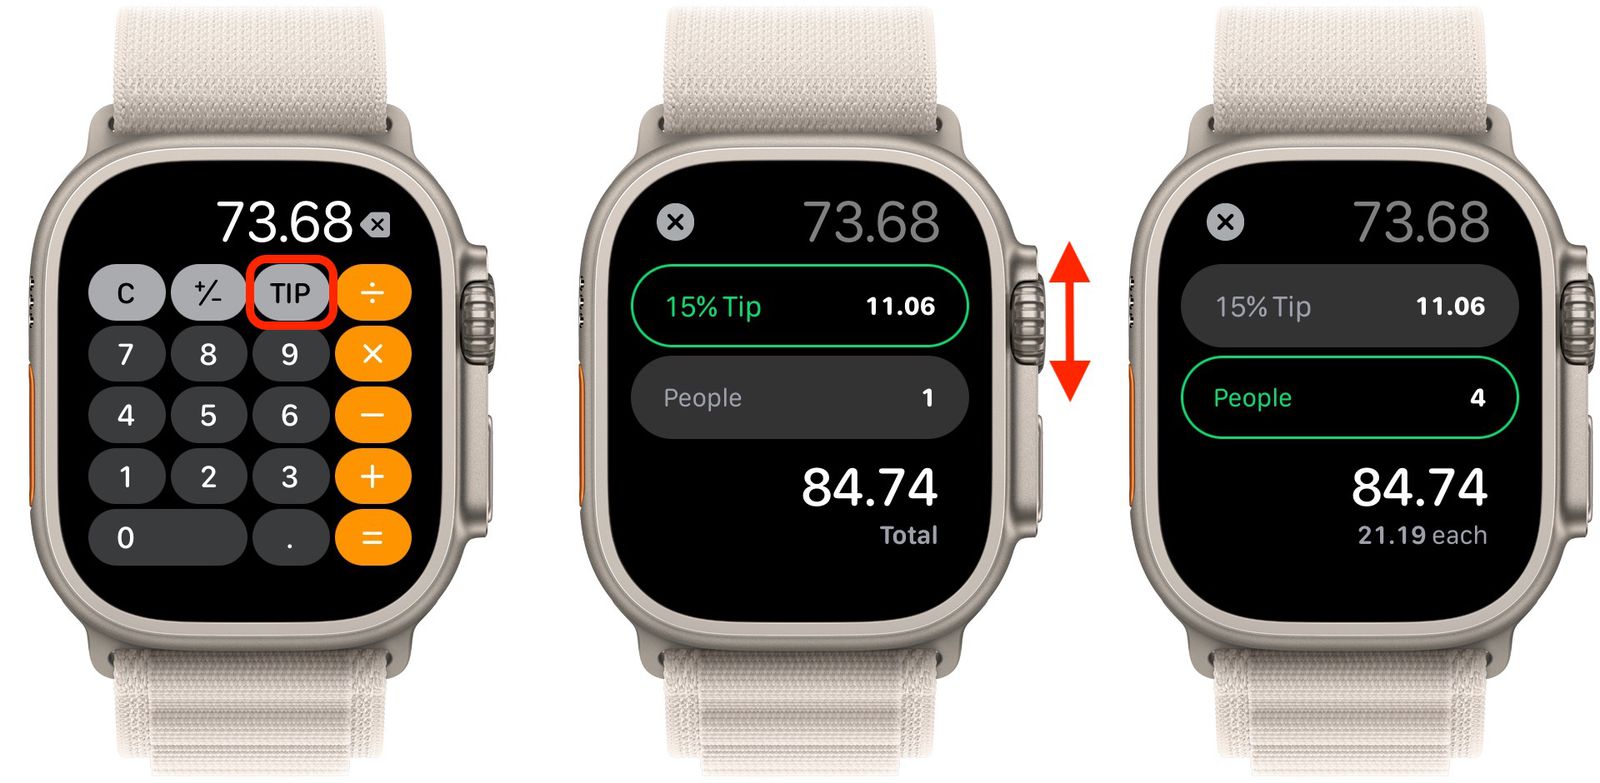 Apple Watch Calculator Tip Function 